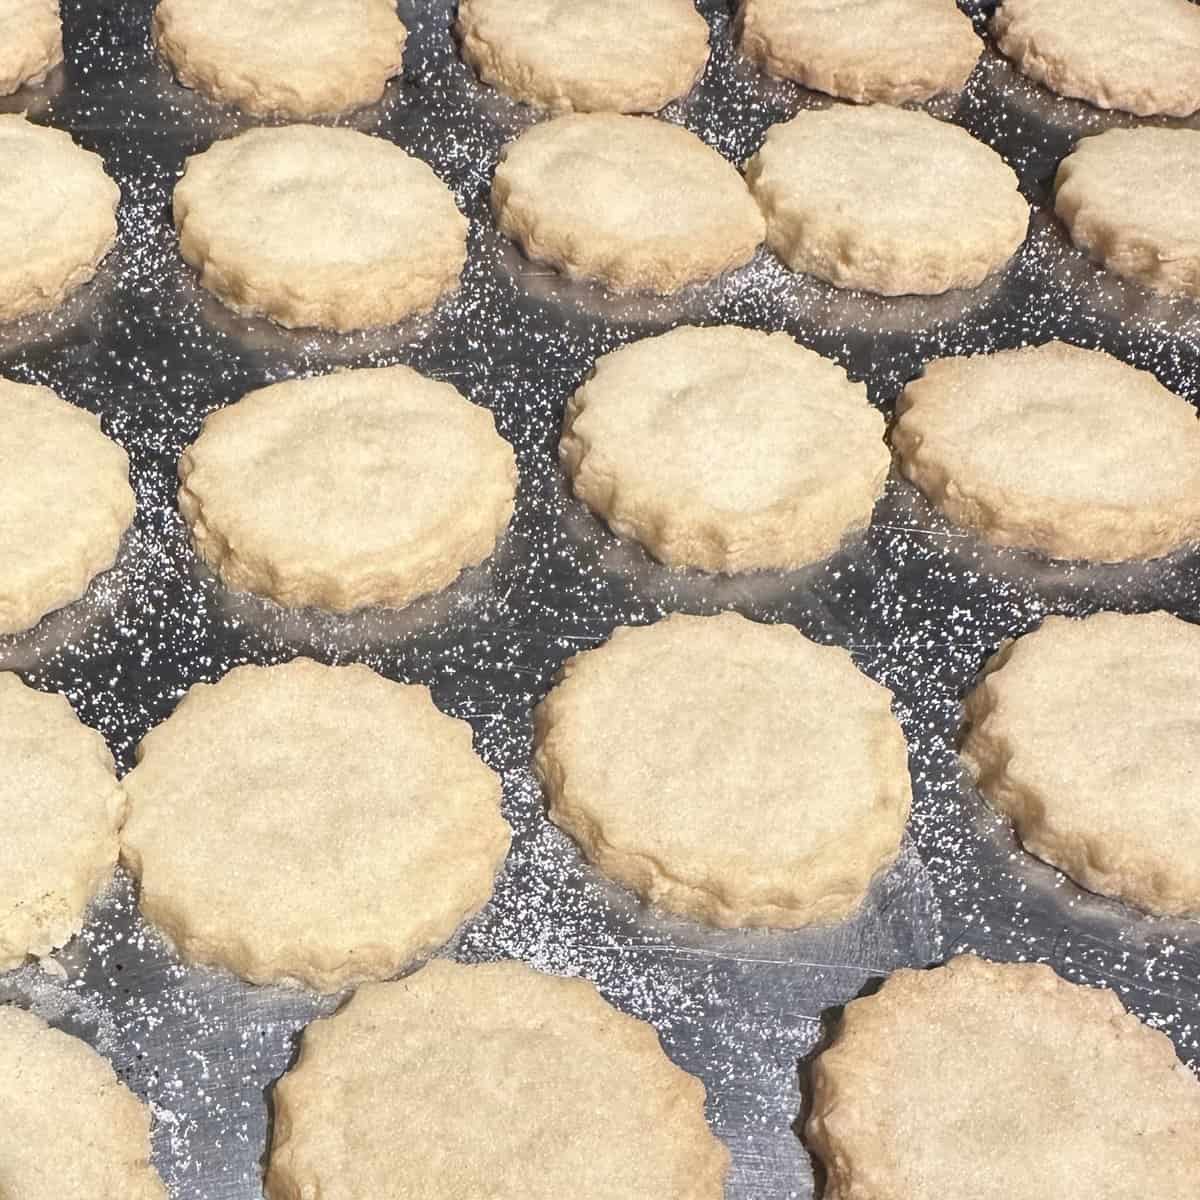 Vegan sable cookies after baking on cookie sheet.